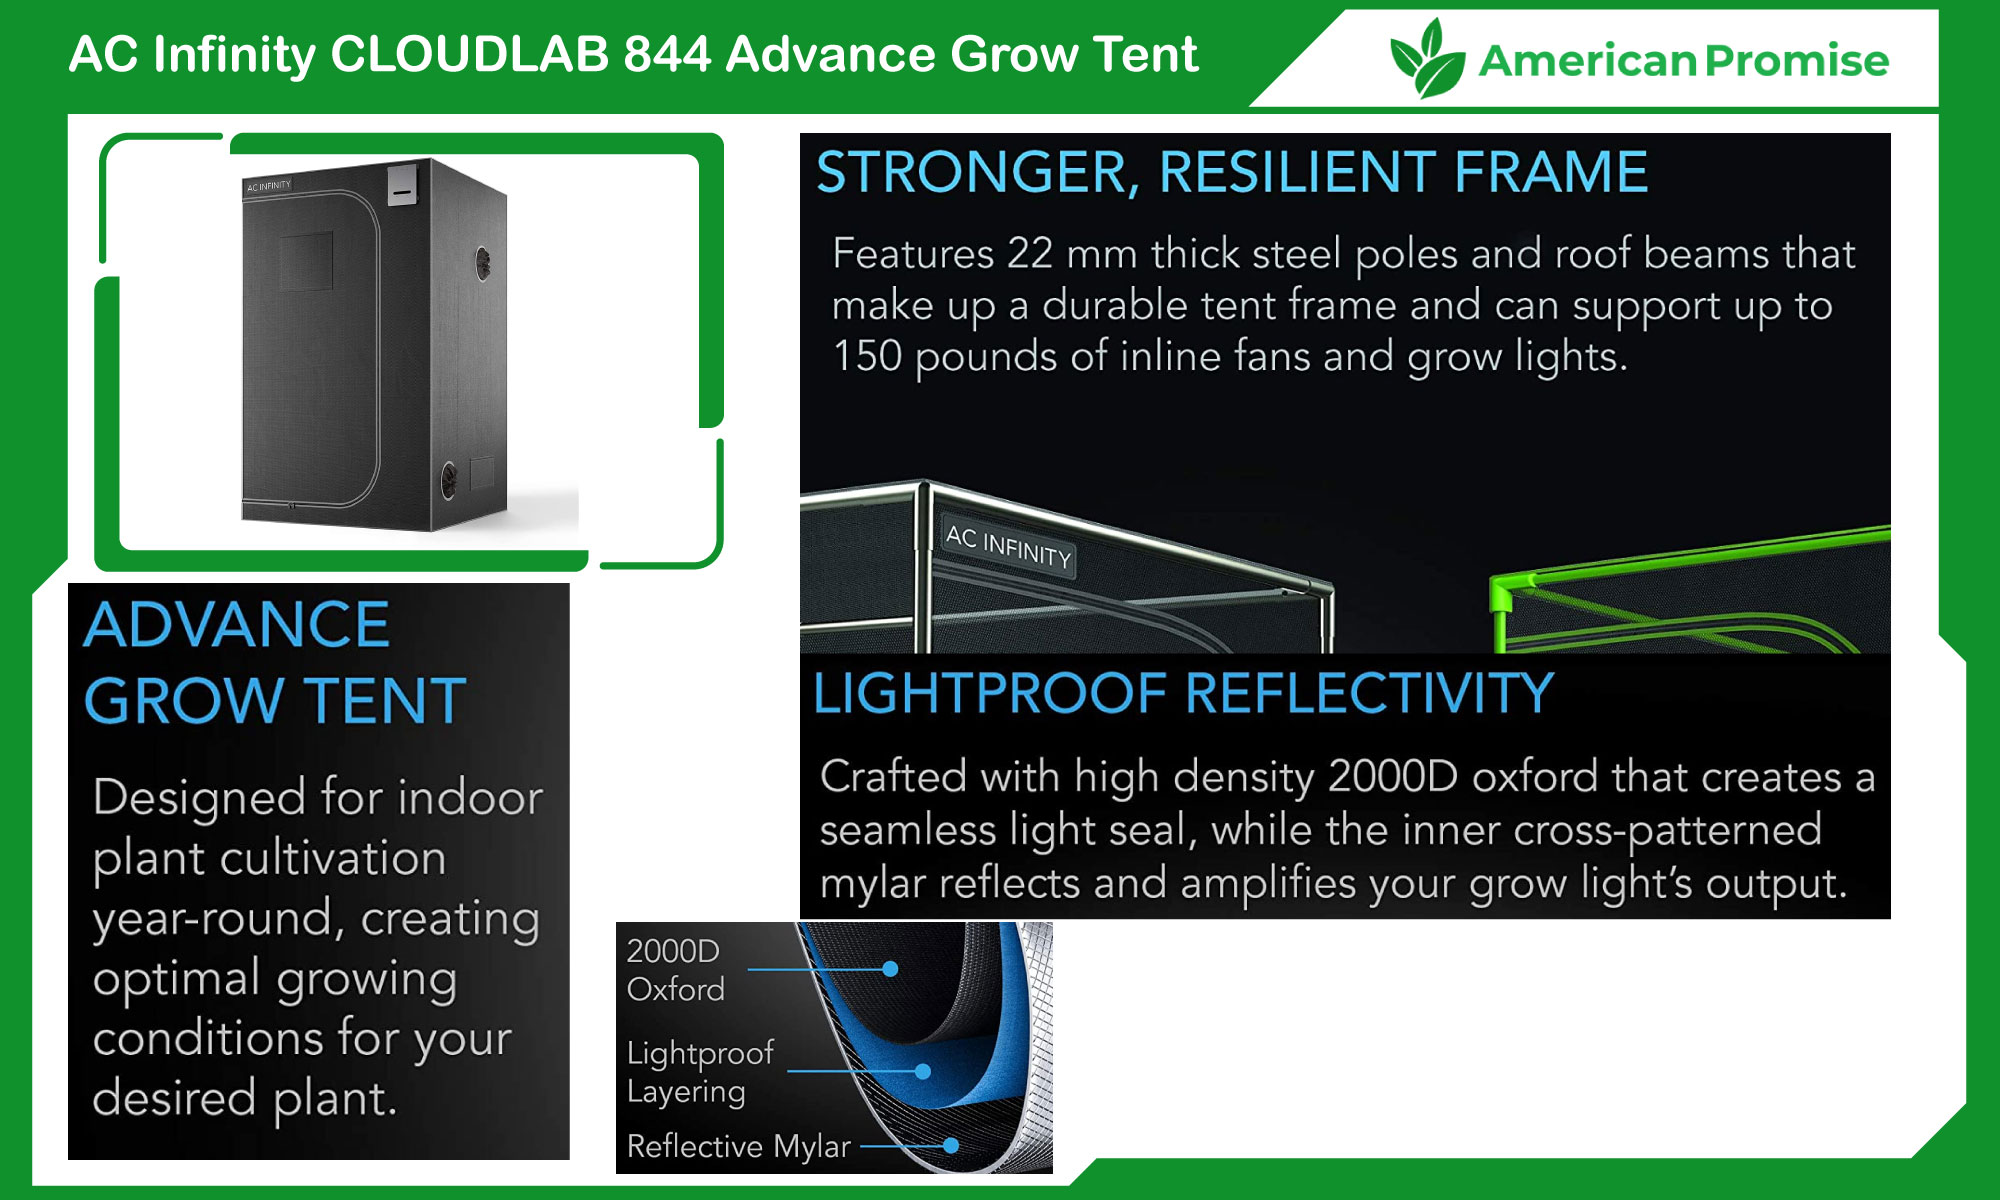 AC Infinity CLOUDLAB 844 Advance Grow Tent